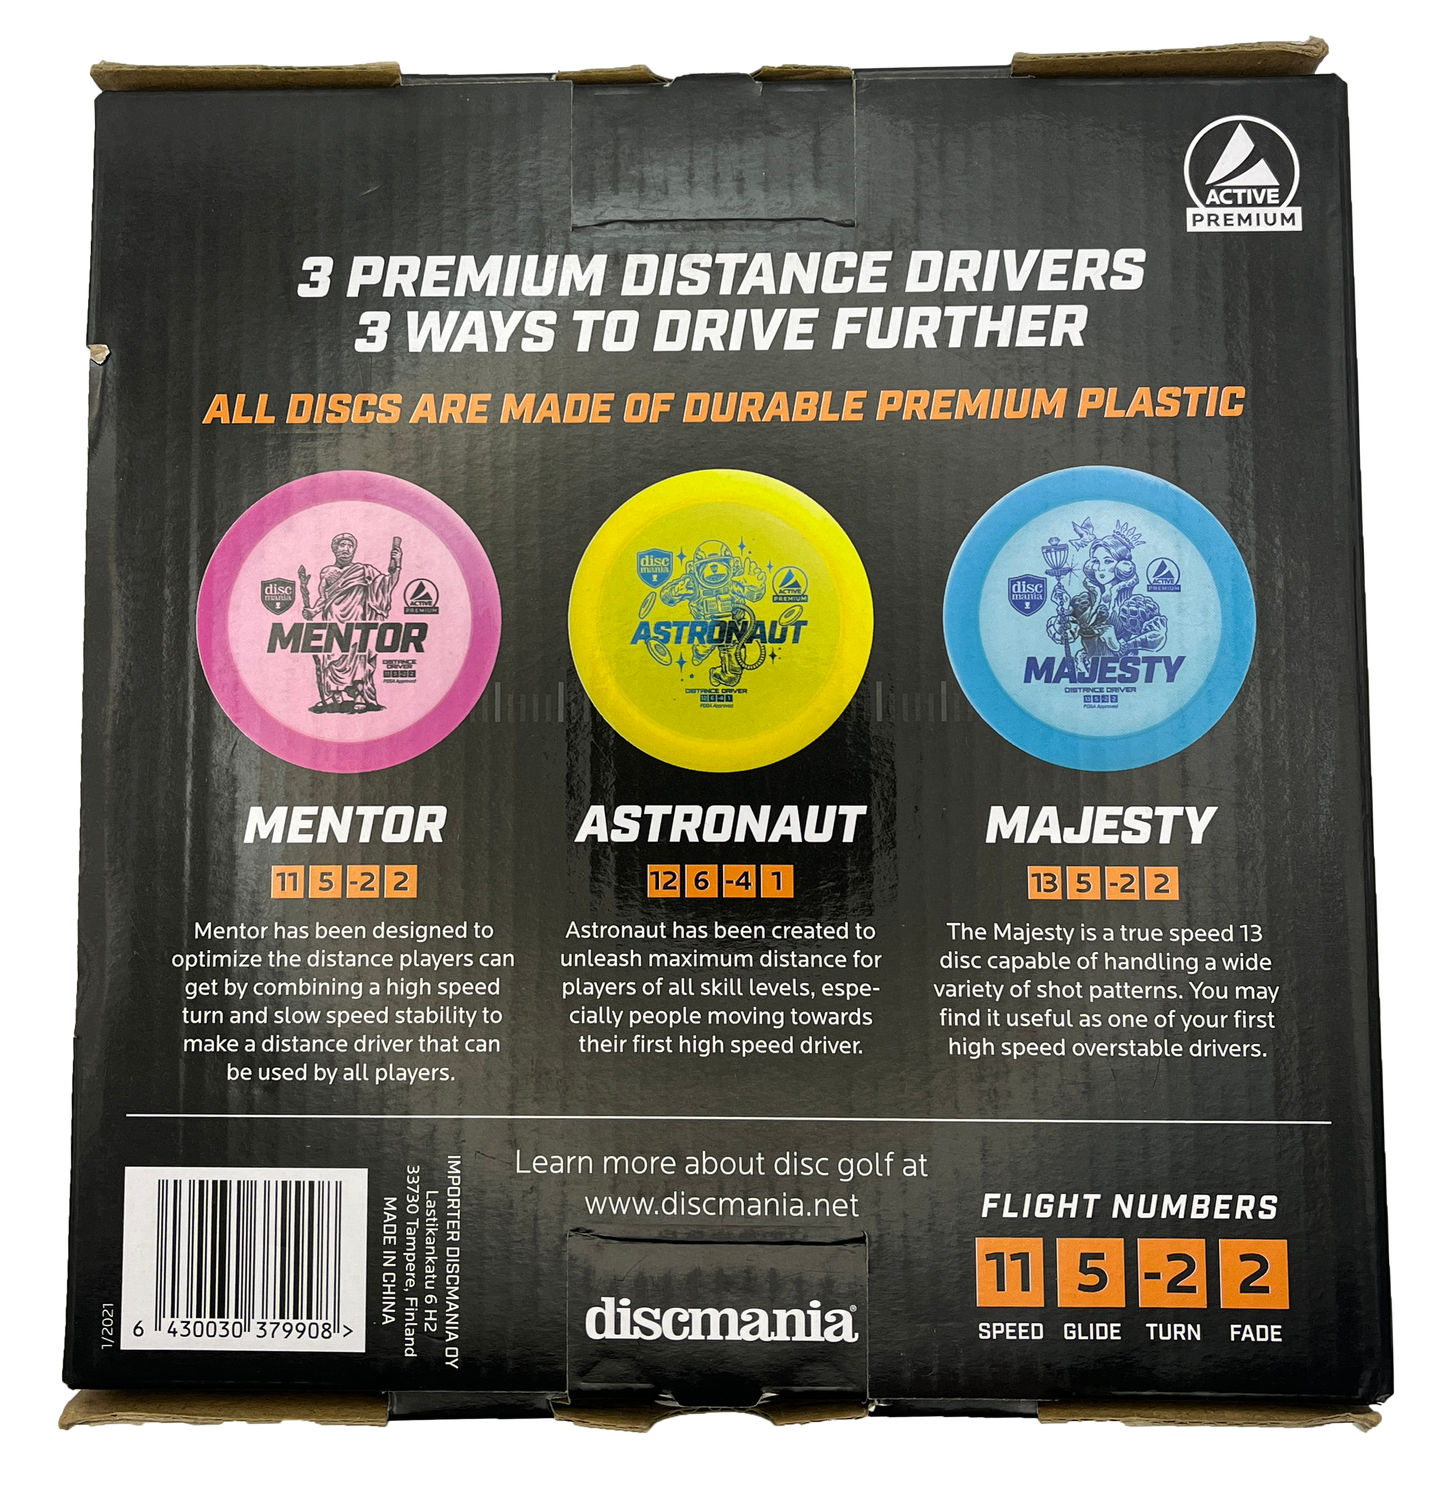 Discmania Mega Distance Set - Active Premium - Intermediate - 3 Discs